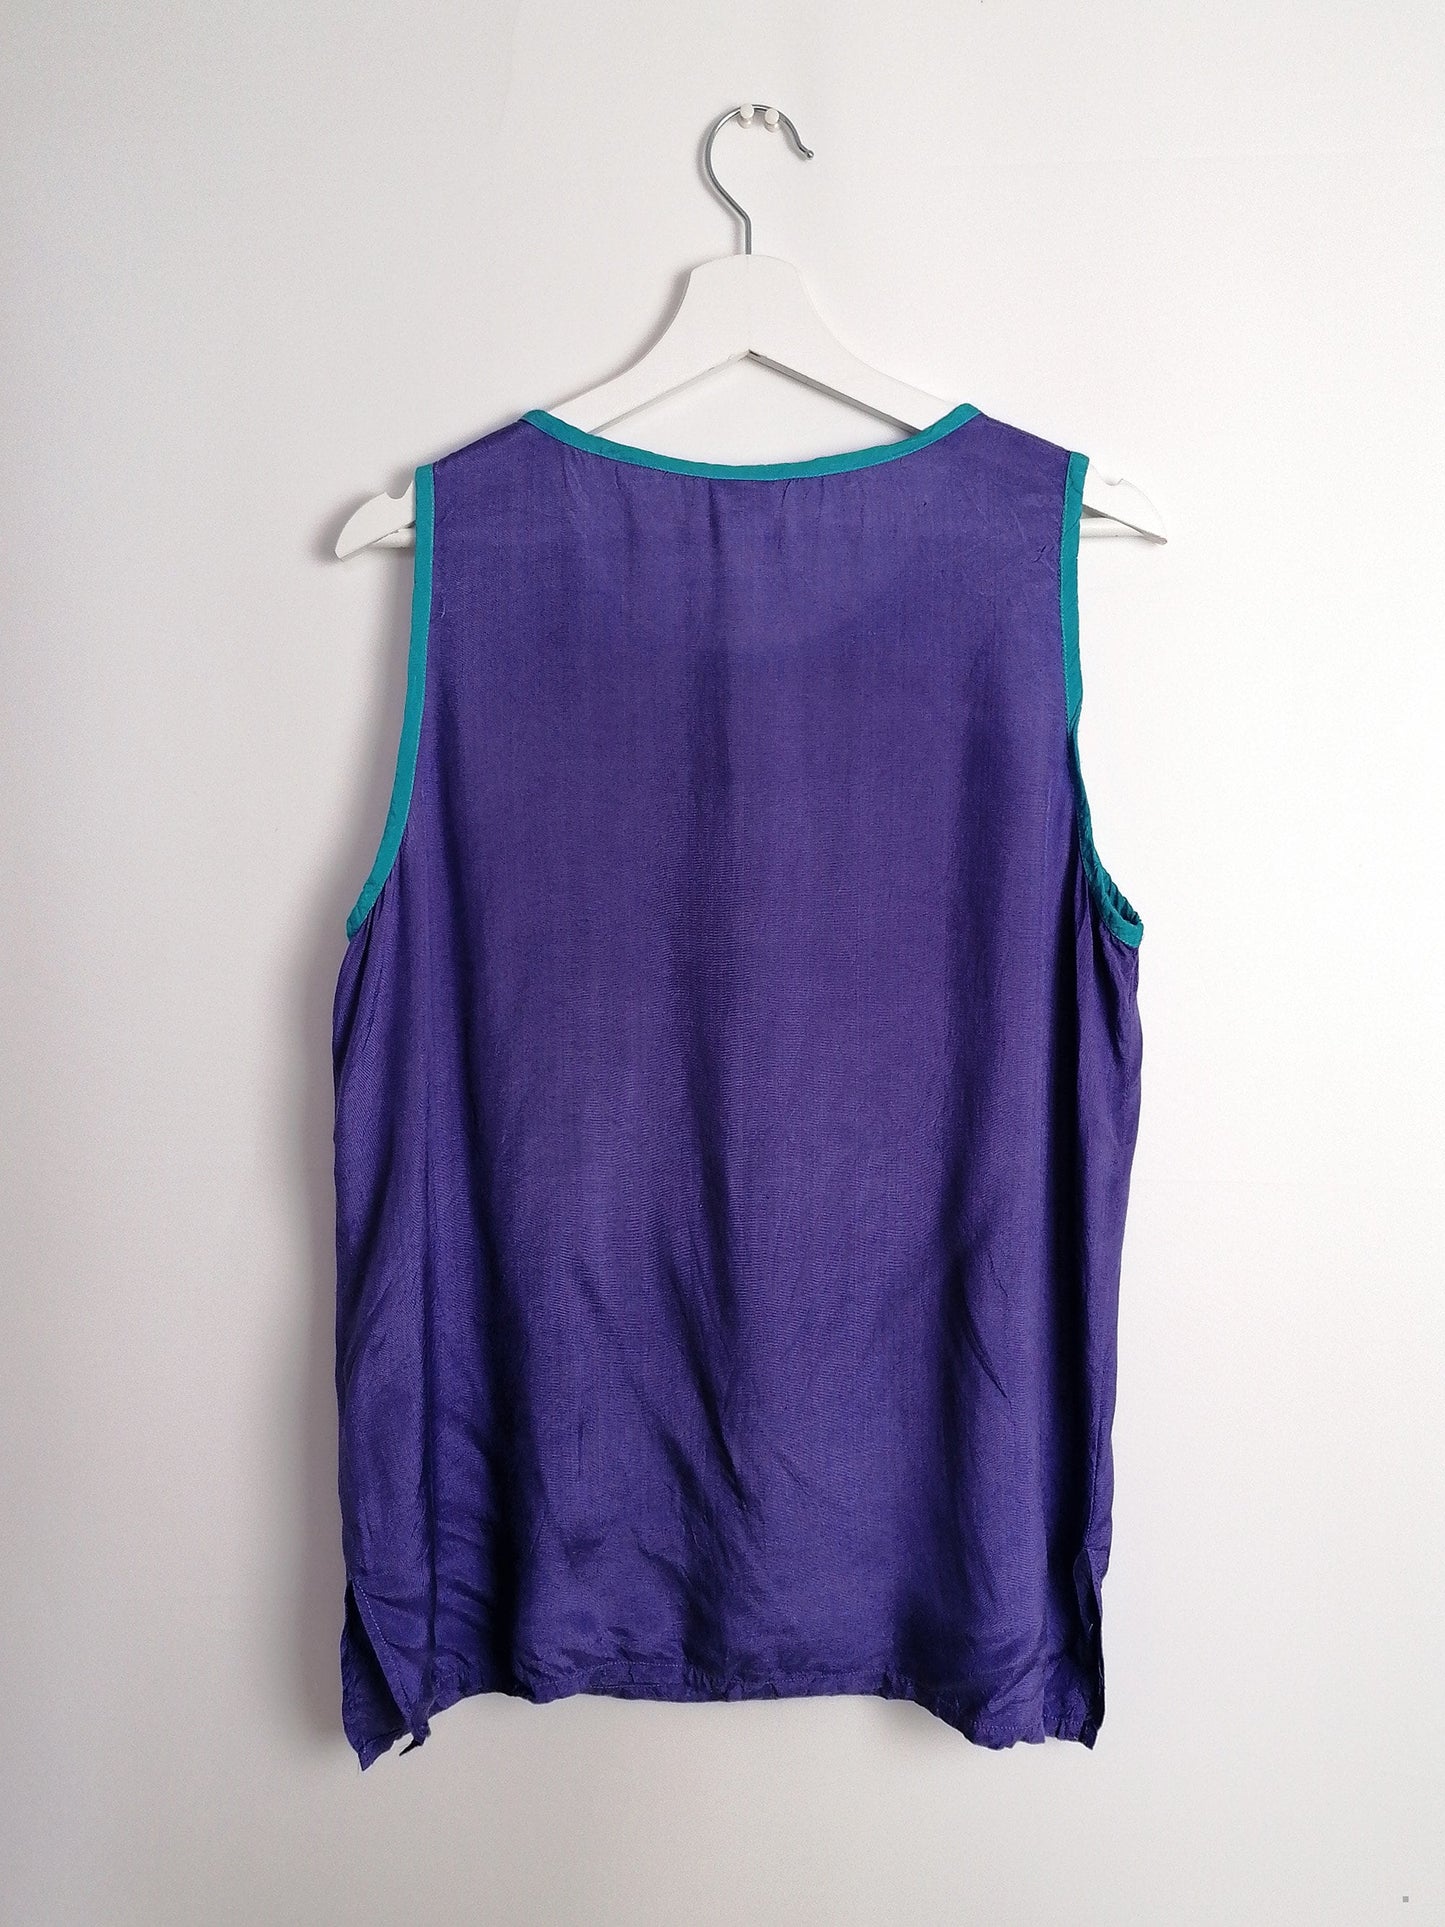 Vintage 80's Silky Vest top